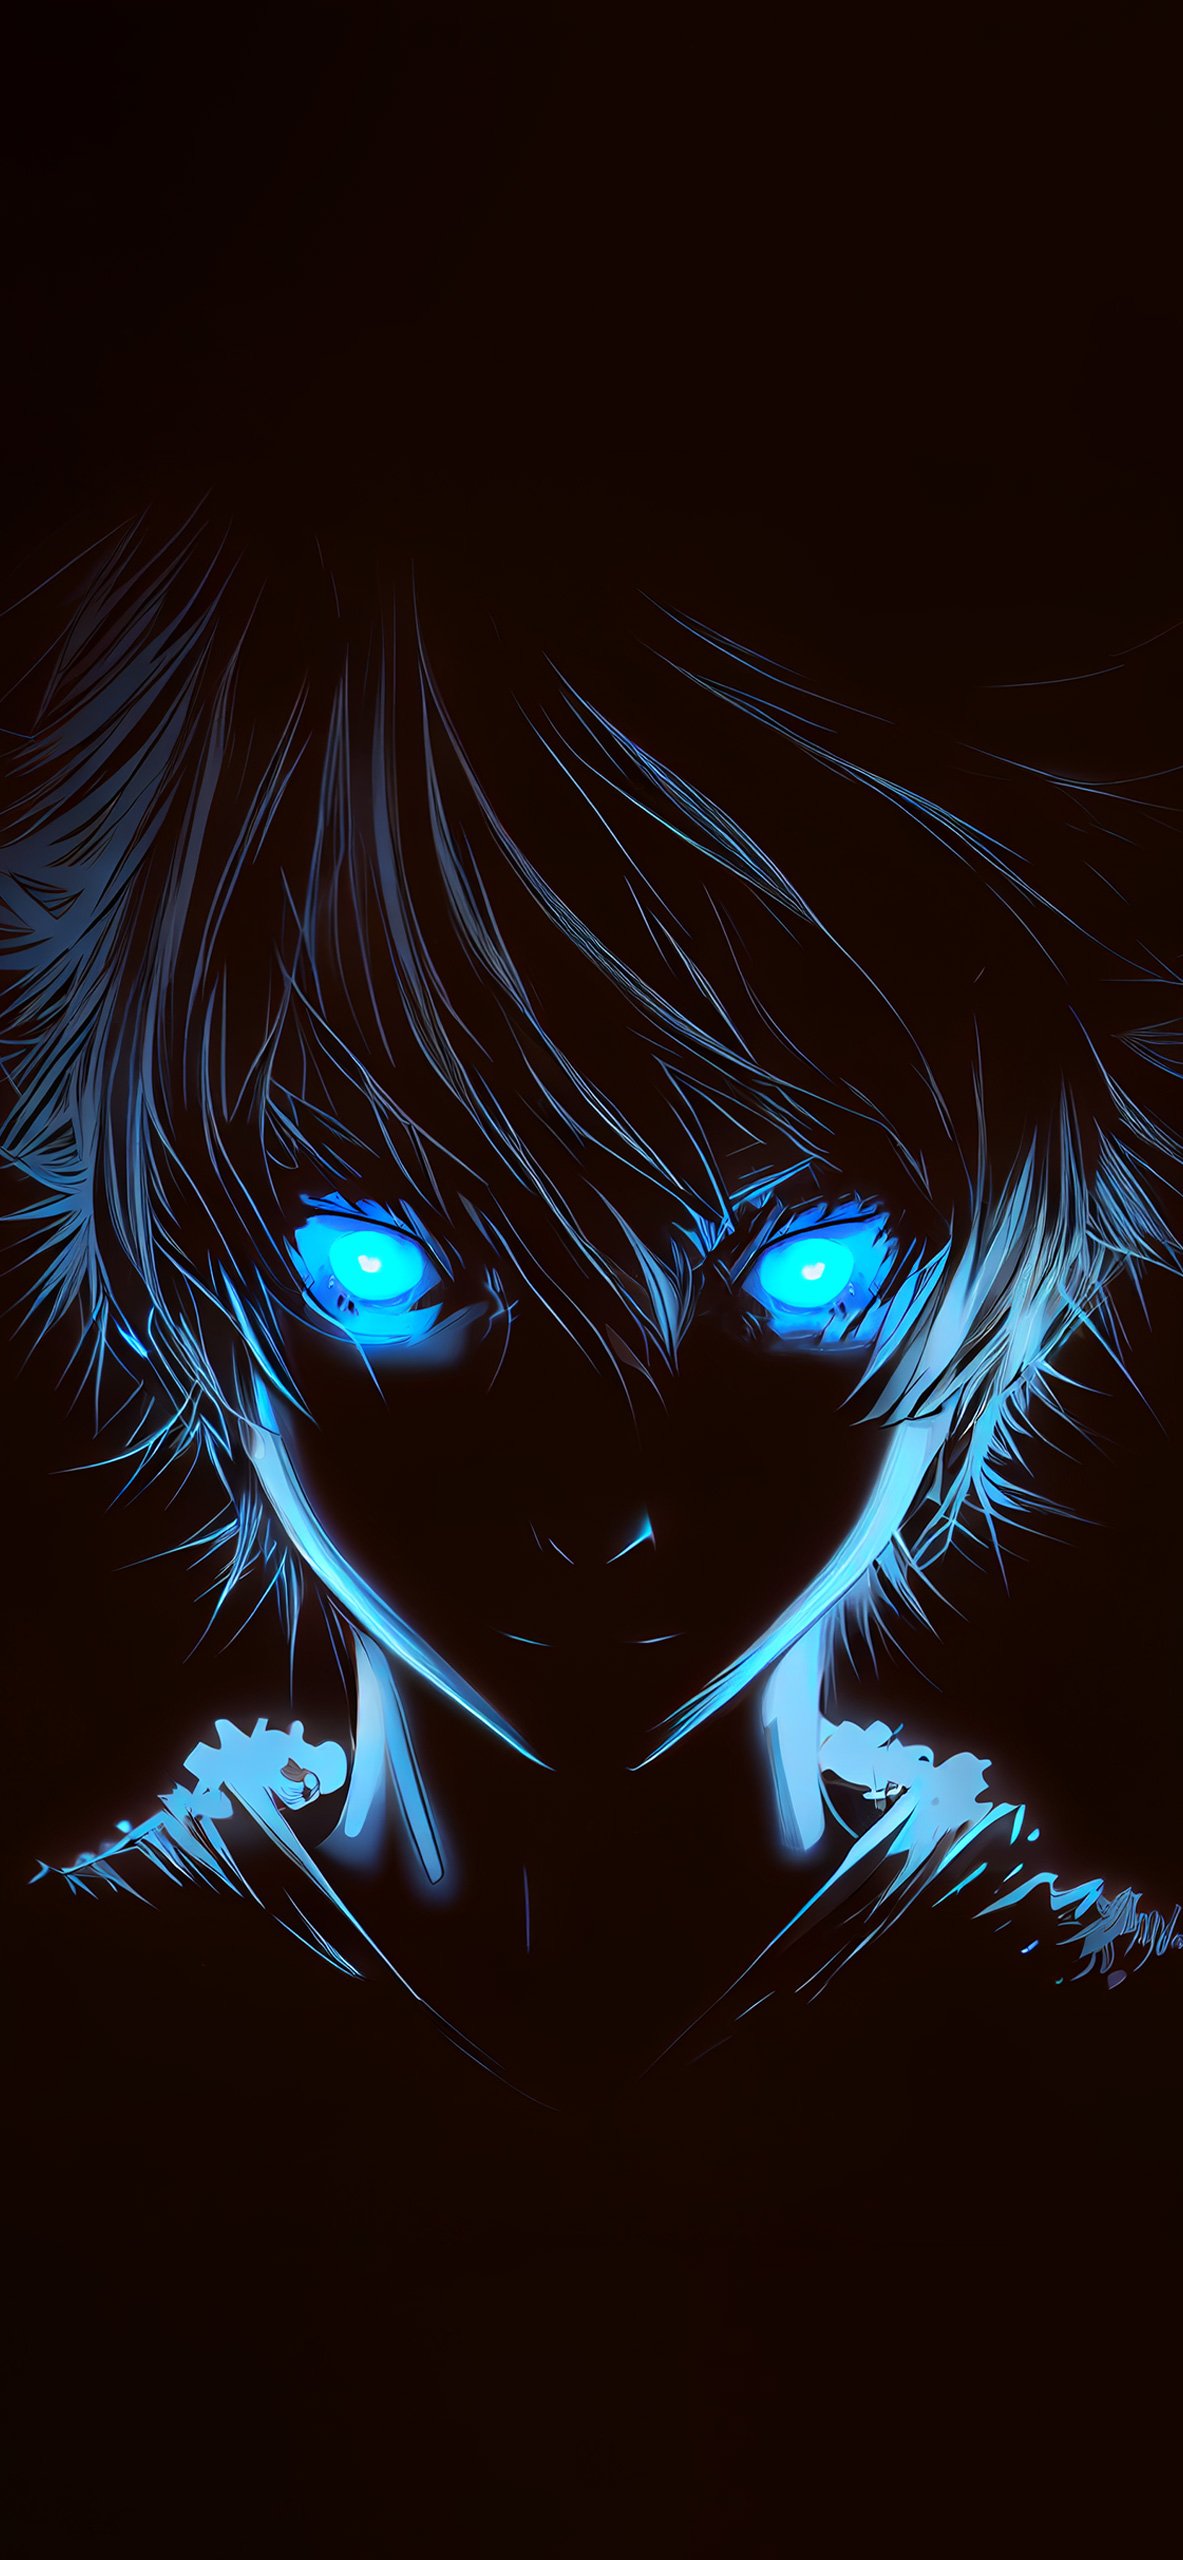 Boy with Blue Glowing Eyes Anime